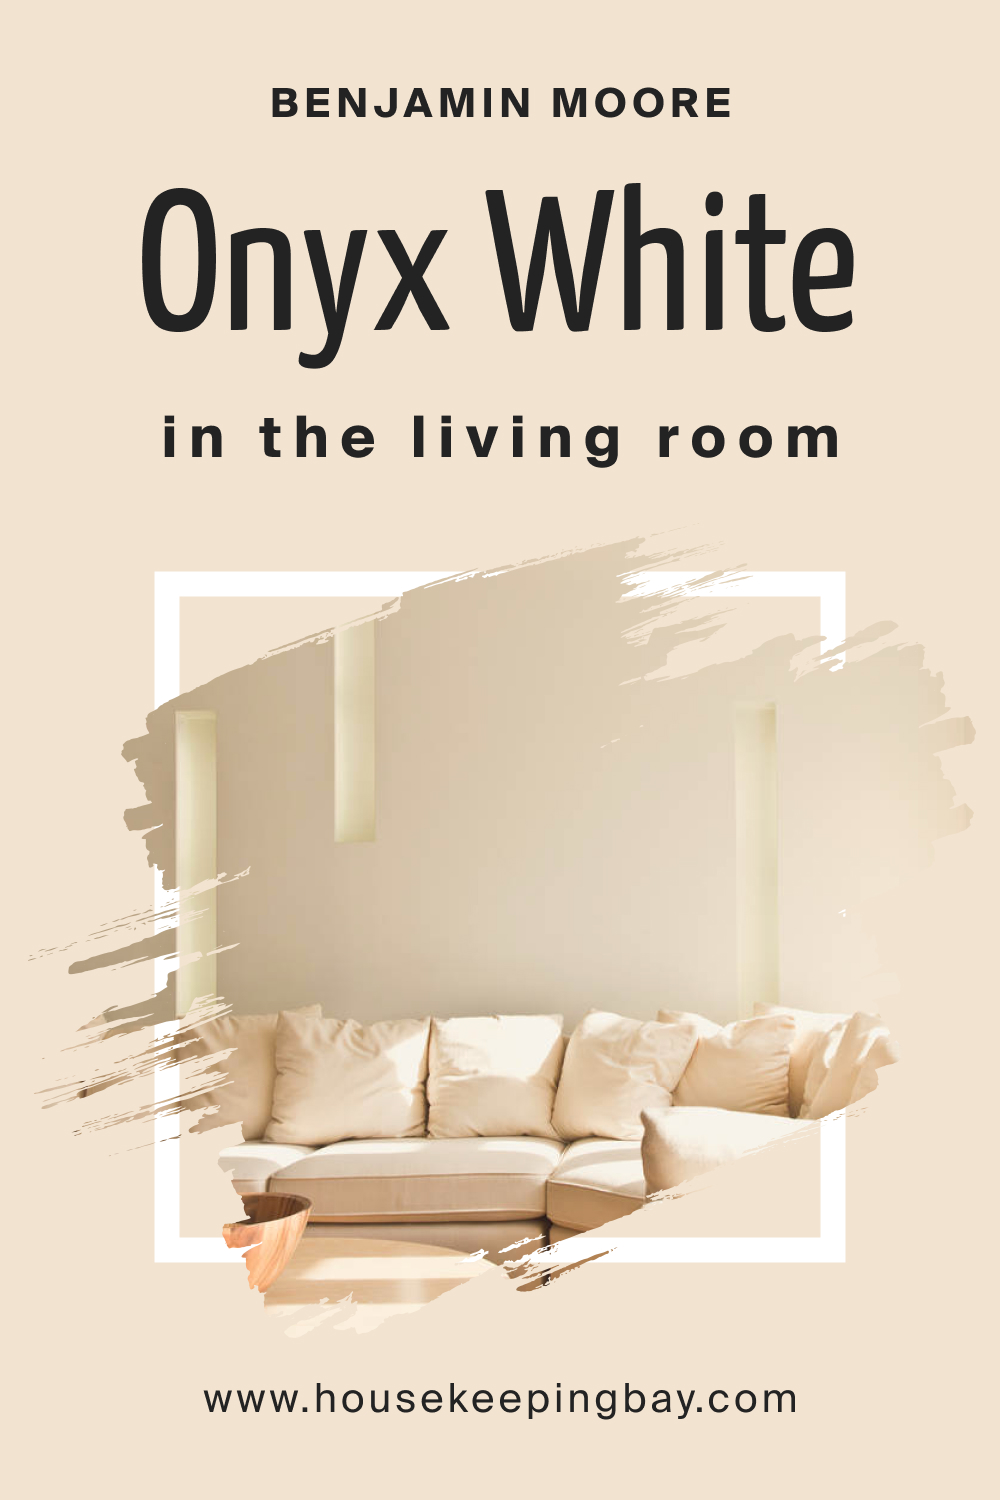 Benjamin Moore. Onyx White OC 74 in the Living Room